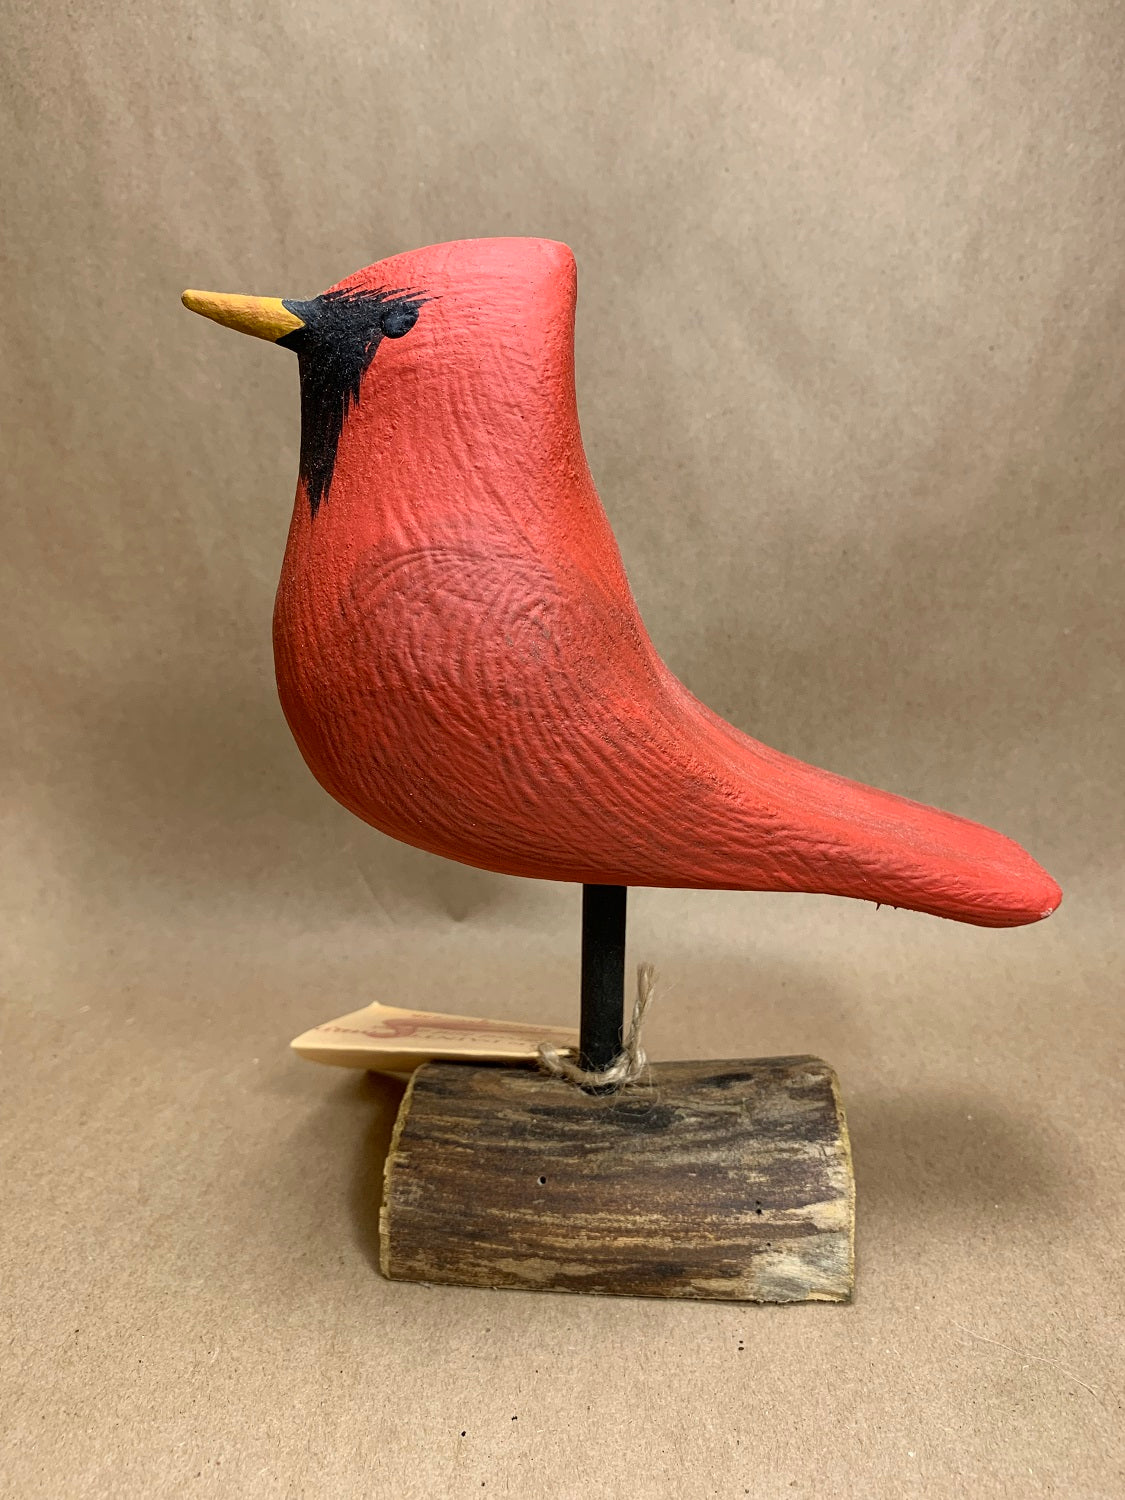 Male Cardinal 7.5"